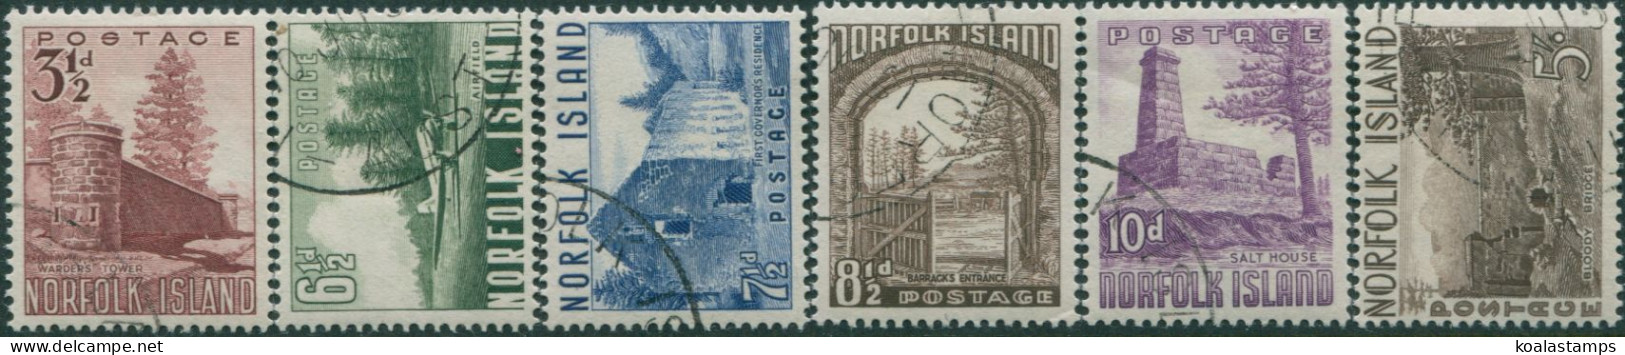 Norfolk Island 1953 SG13-18 Definitives Set FU - Ile Norfolk